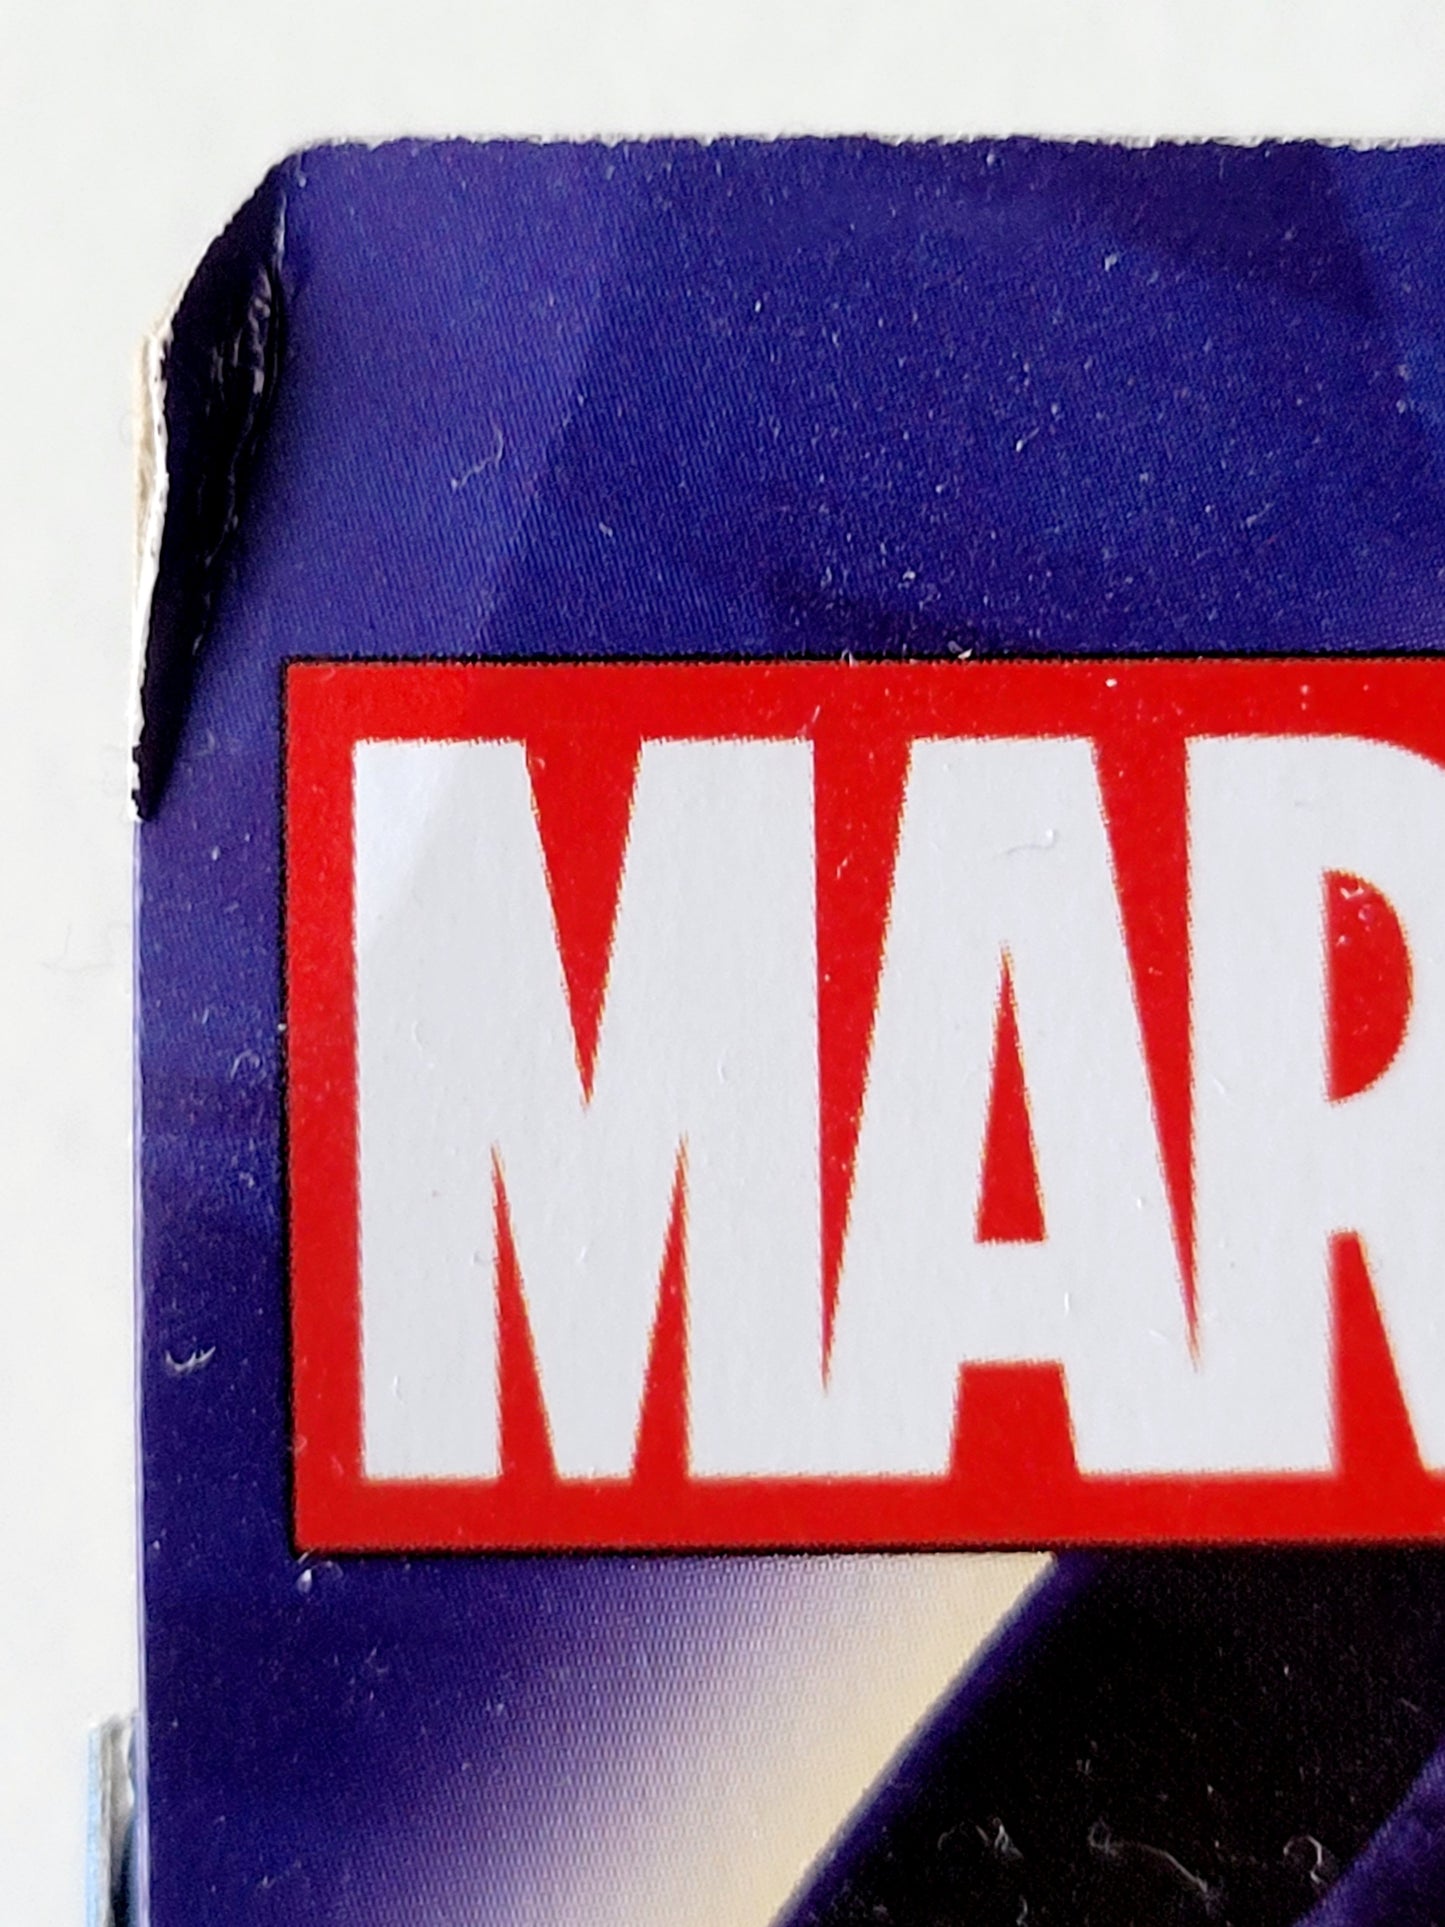 Captain Marvel Minimates Walgreens Exclusive Captain Marvel & Bron Char